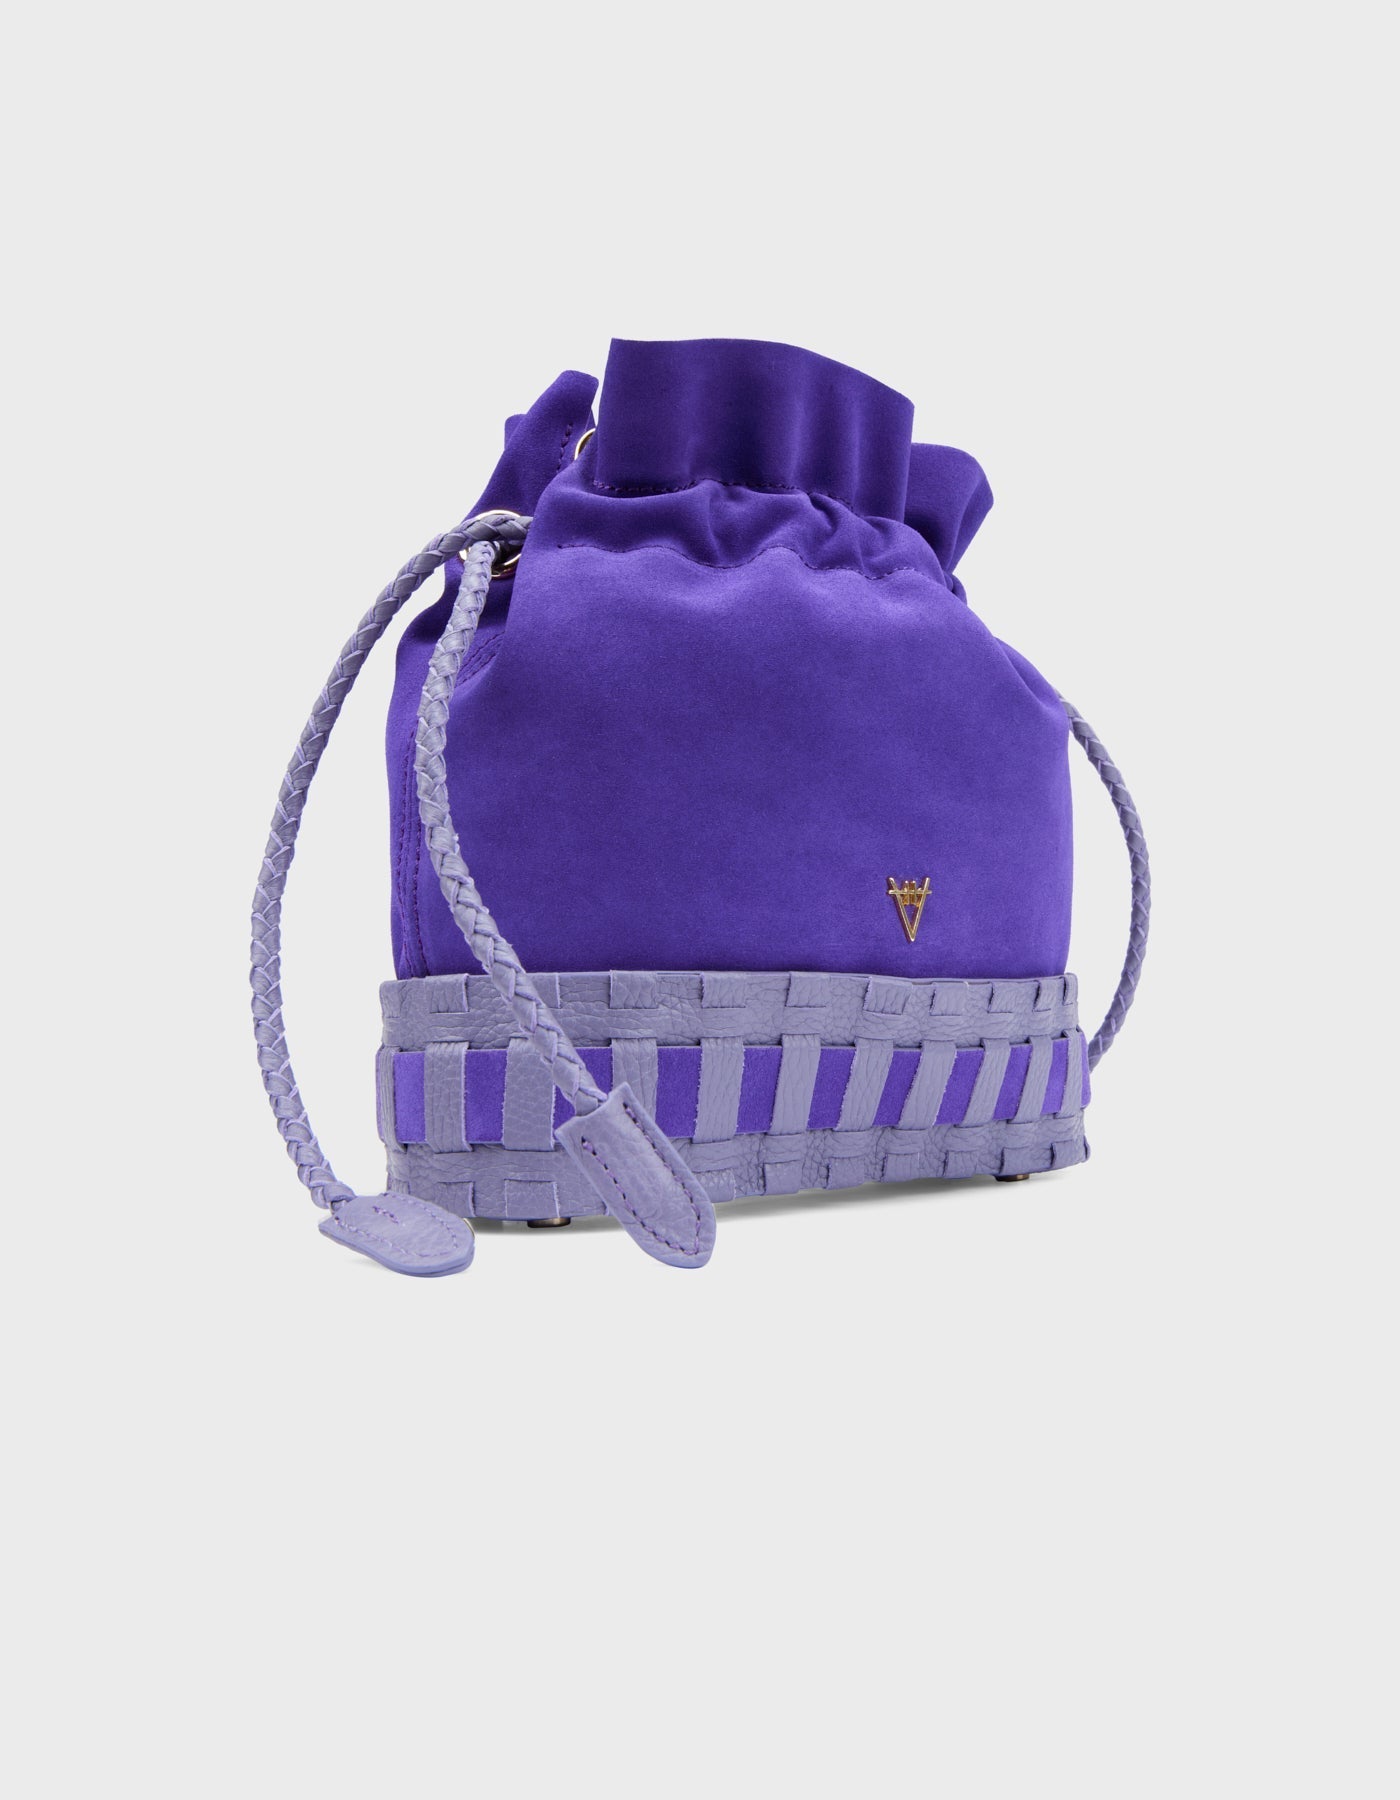 HiVa Atelier - Lavinia Bucket Bag Lavender Suede